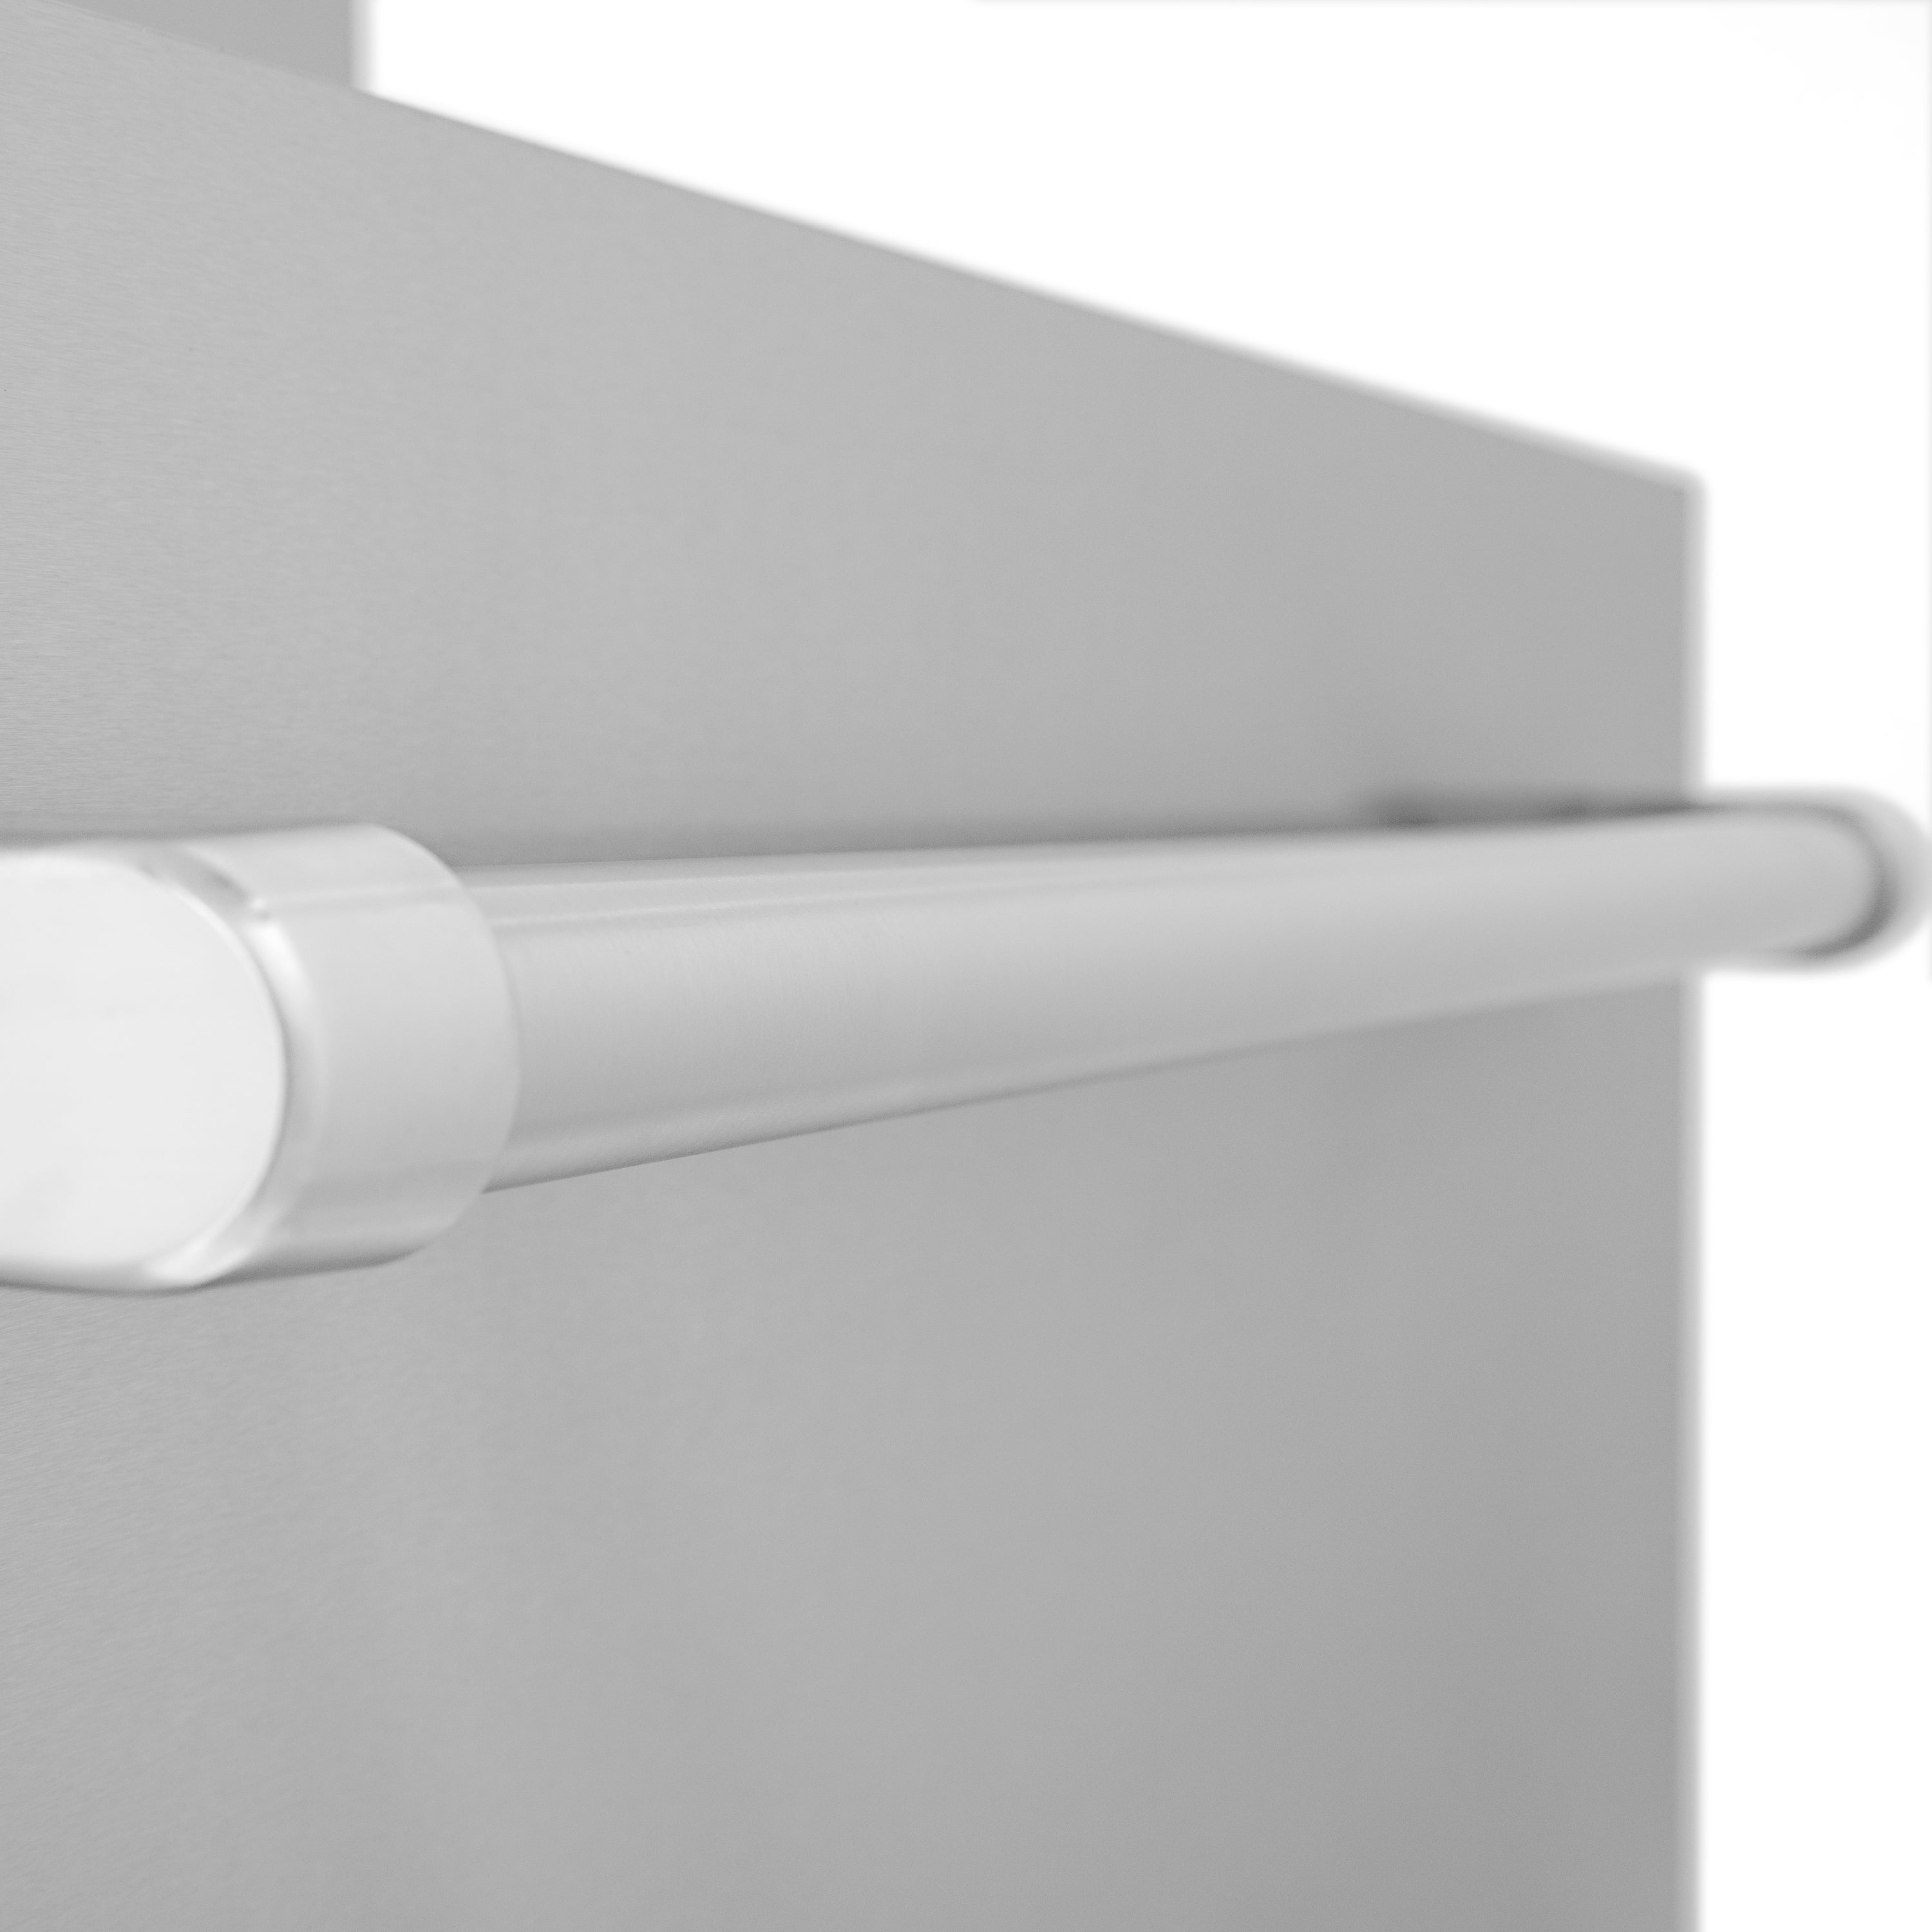 ZLINE 30" Refrigerator Panels in Fingerprint Resistant Stainless Steel for a 30" Buit-in Refrigerator (RPBIV-SN-30)